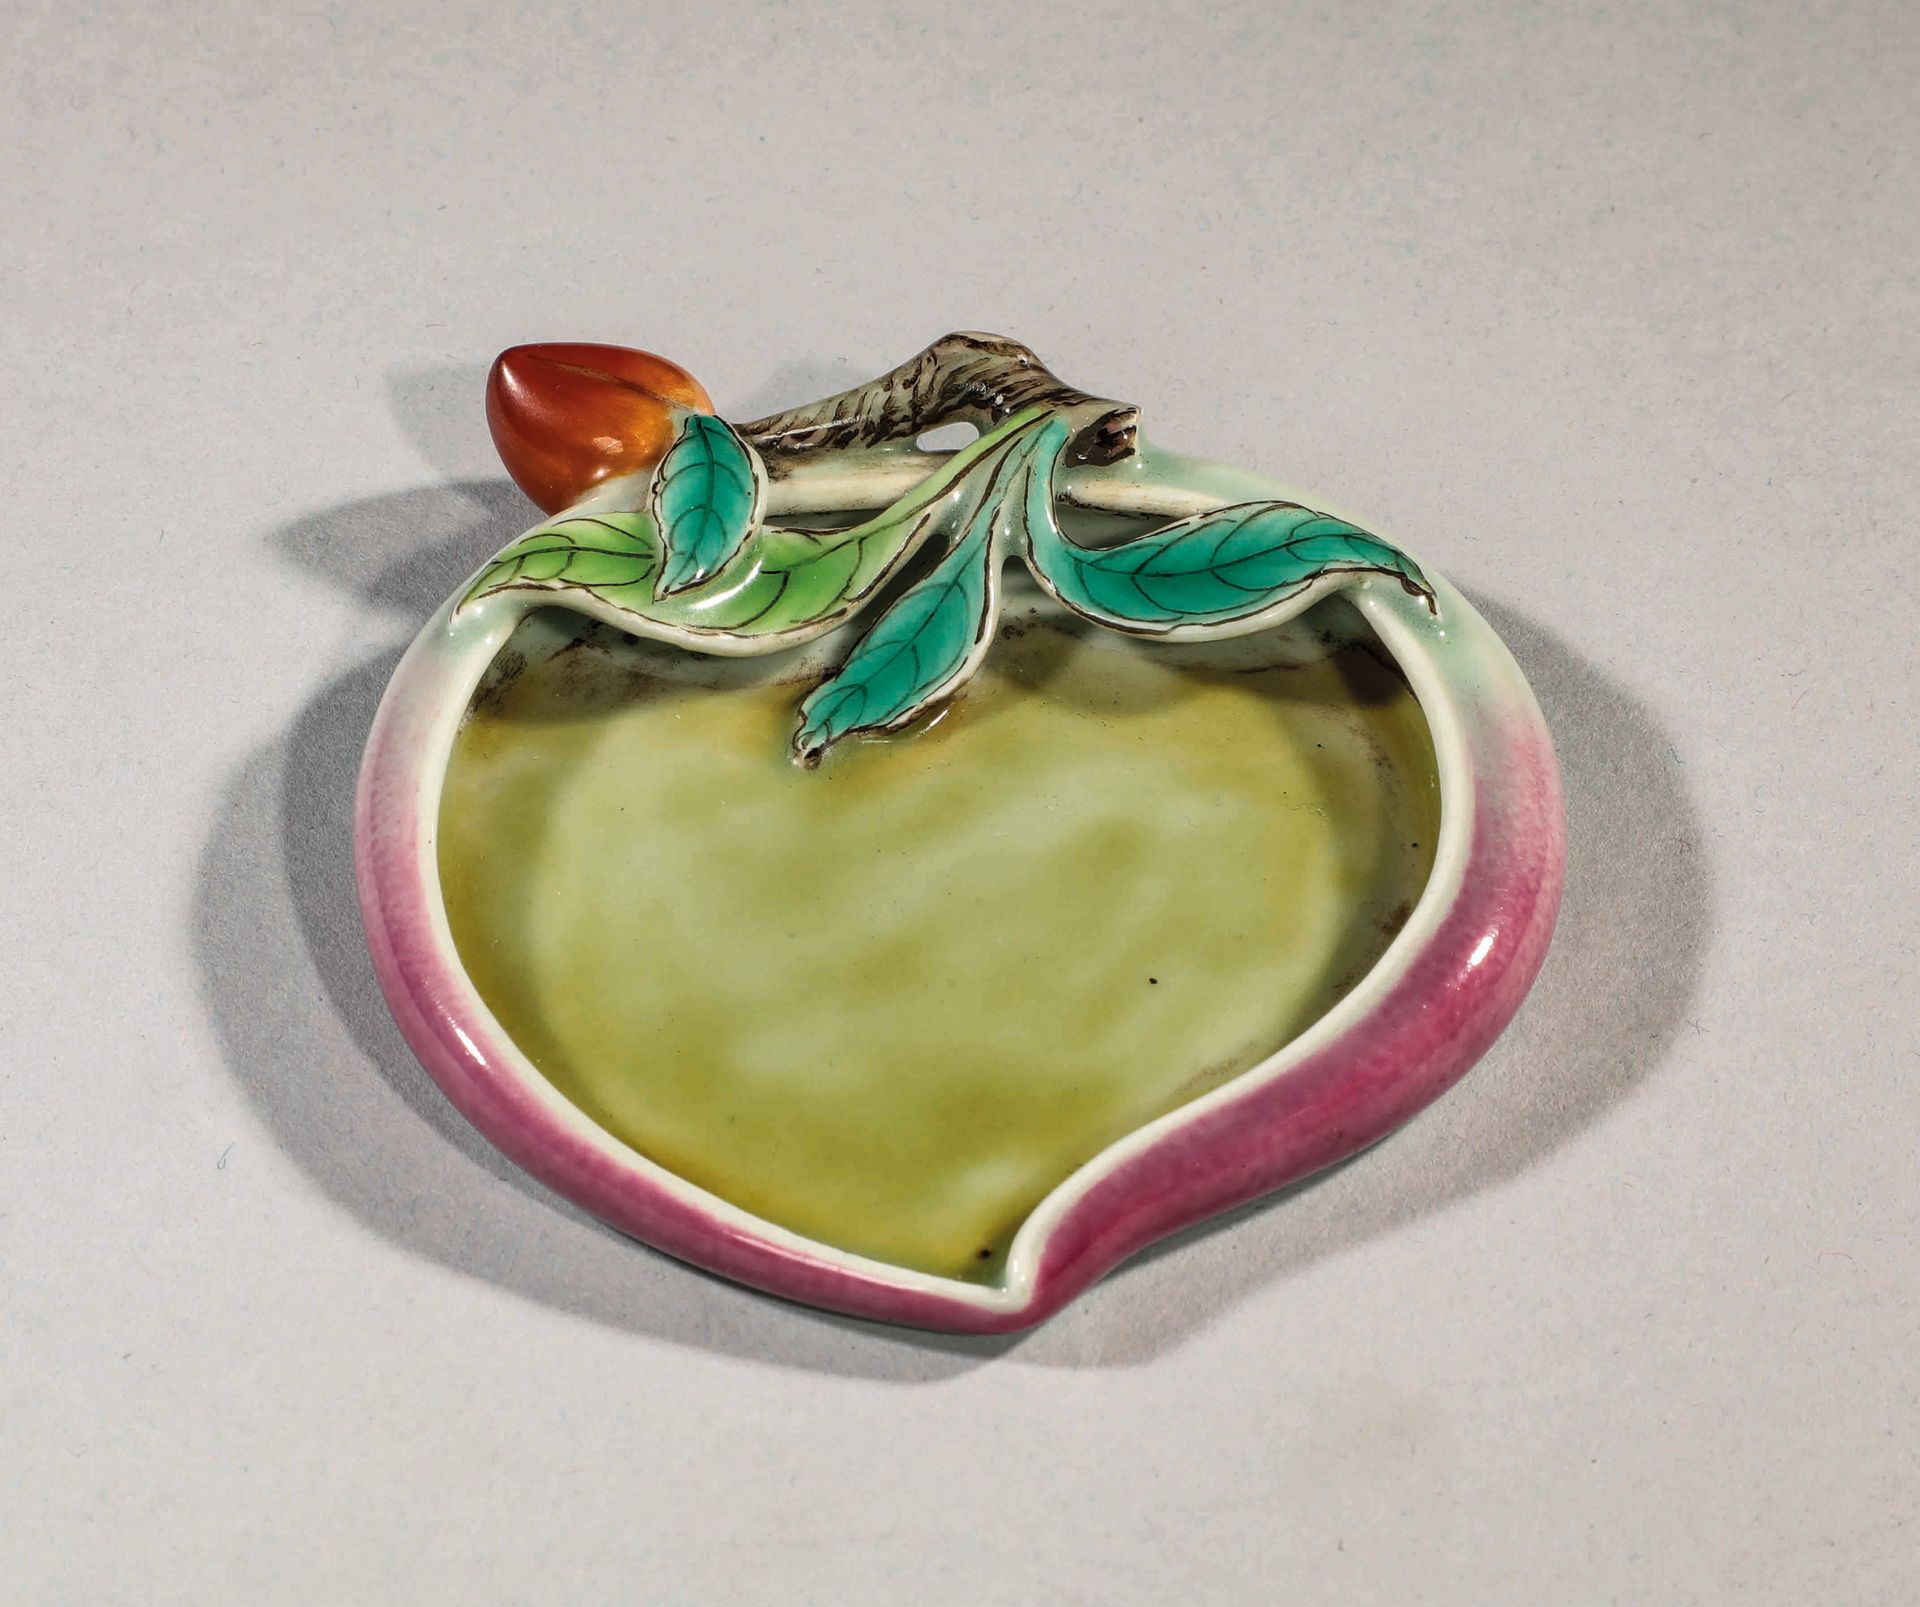 Null 画家的GODET在长寿桃形状的装饰下。
带着树枝的叶子和桃子。
杯子背面有 "大清道光年制 "的标记
道光时期(1782-1850)
L. 8,33 &hellip;